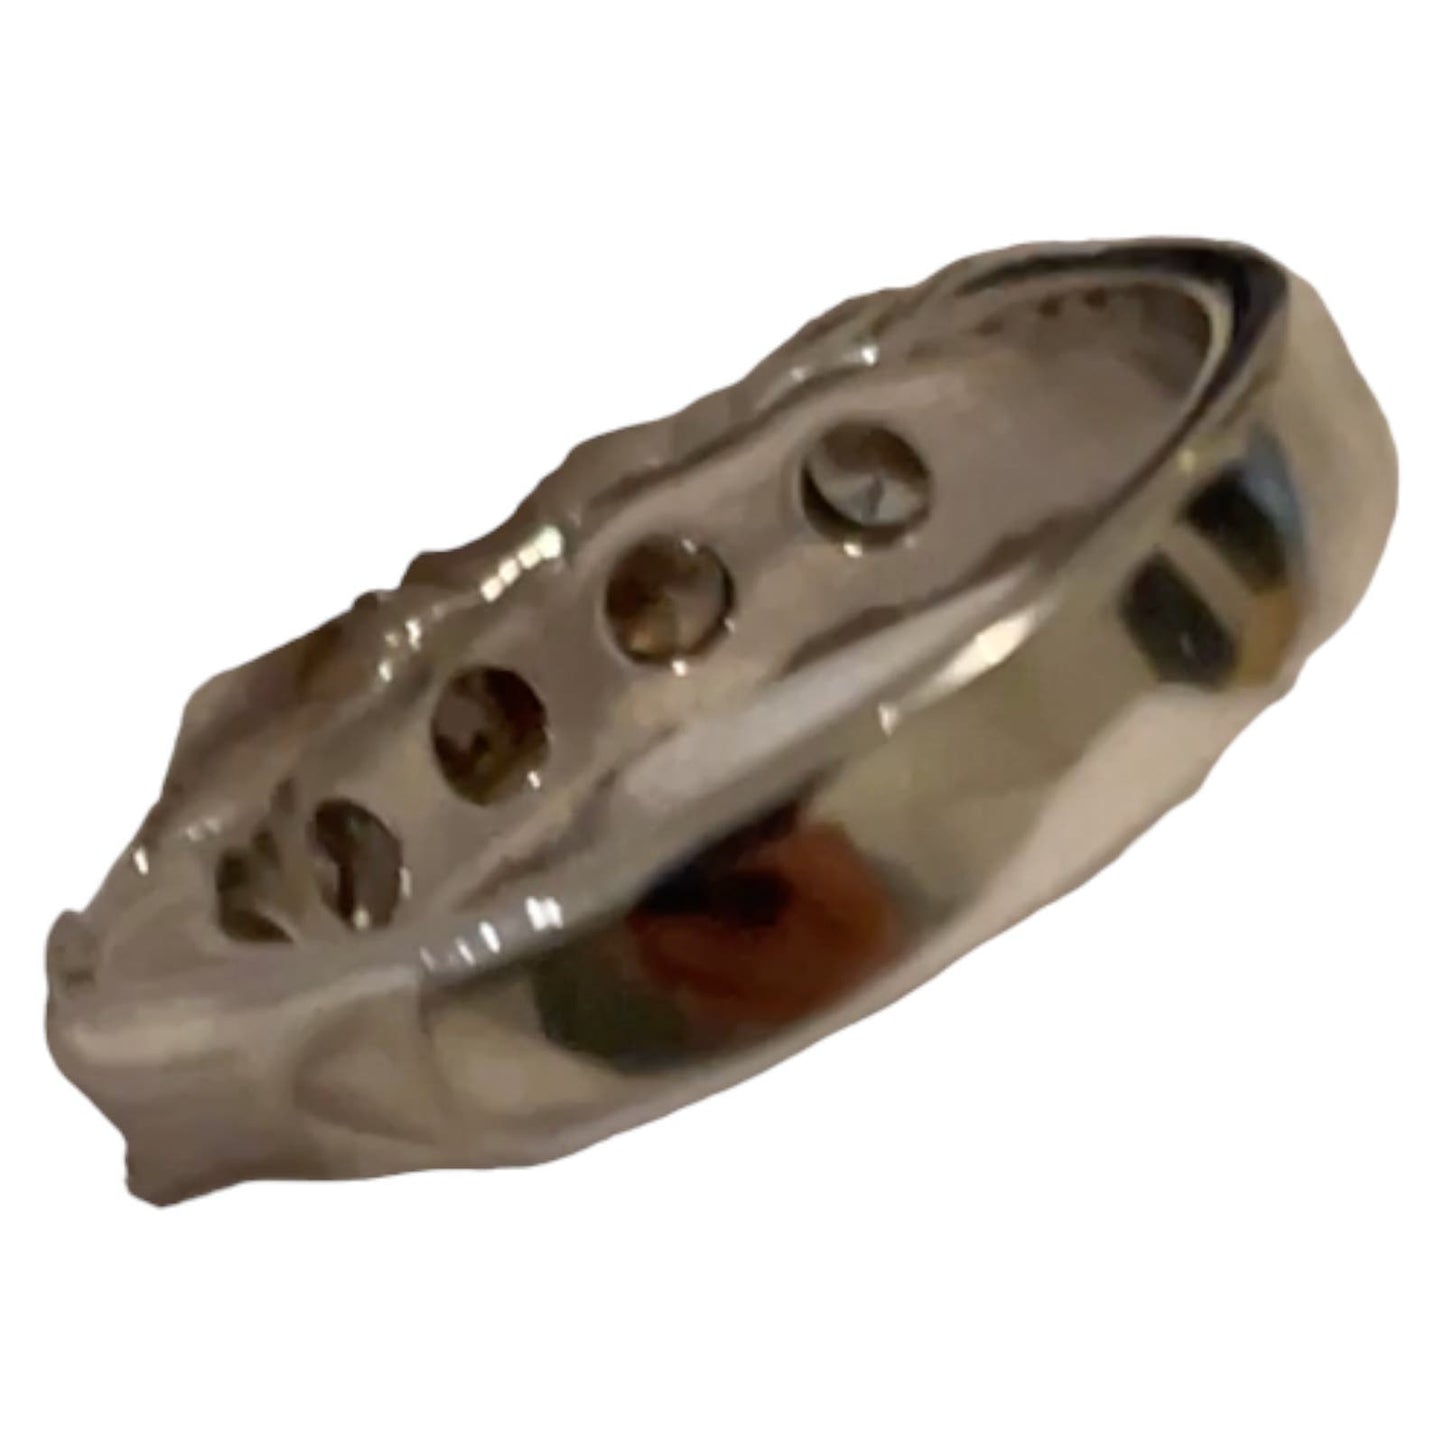 Platinum 950 1.75 Ct 5 Diamond Ring, Size 5, VS1, F Color, USA Made